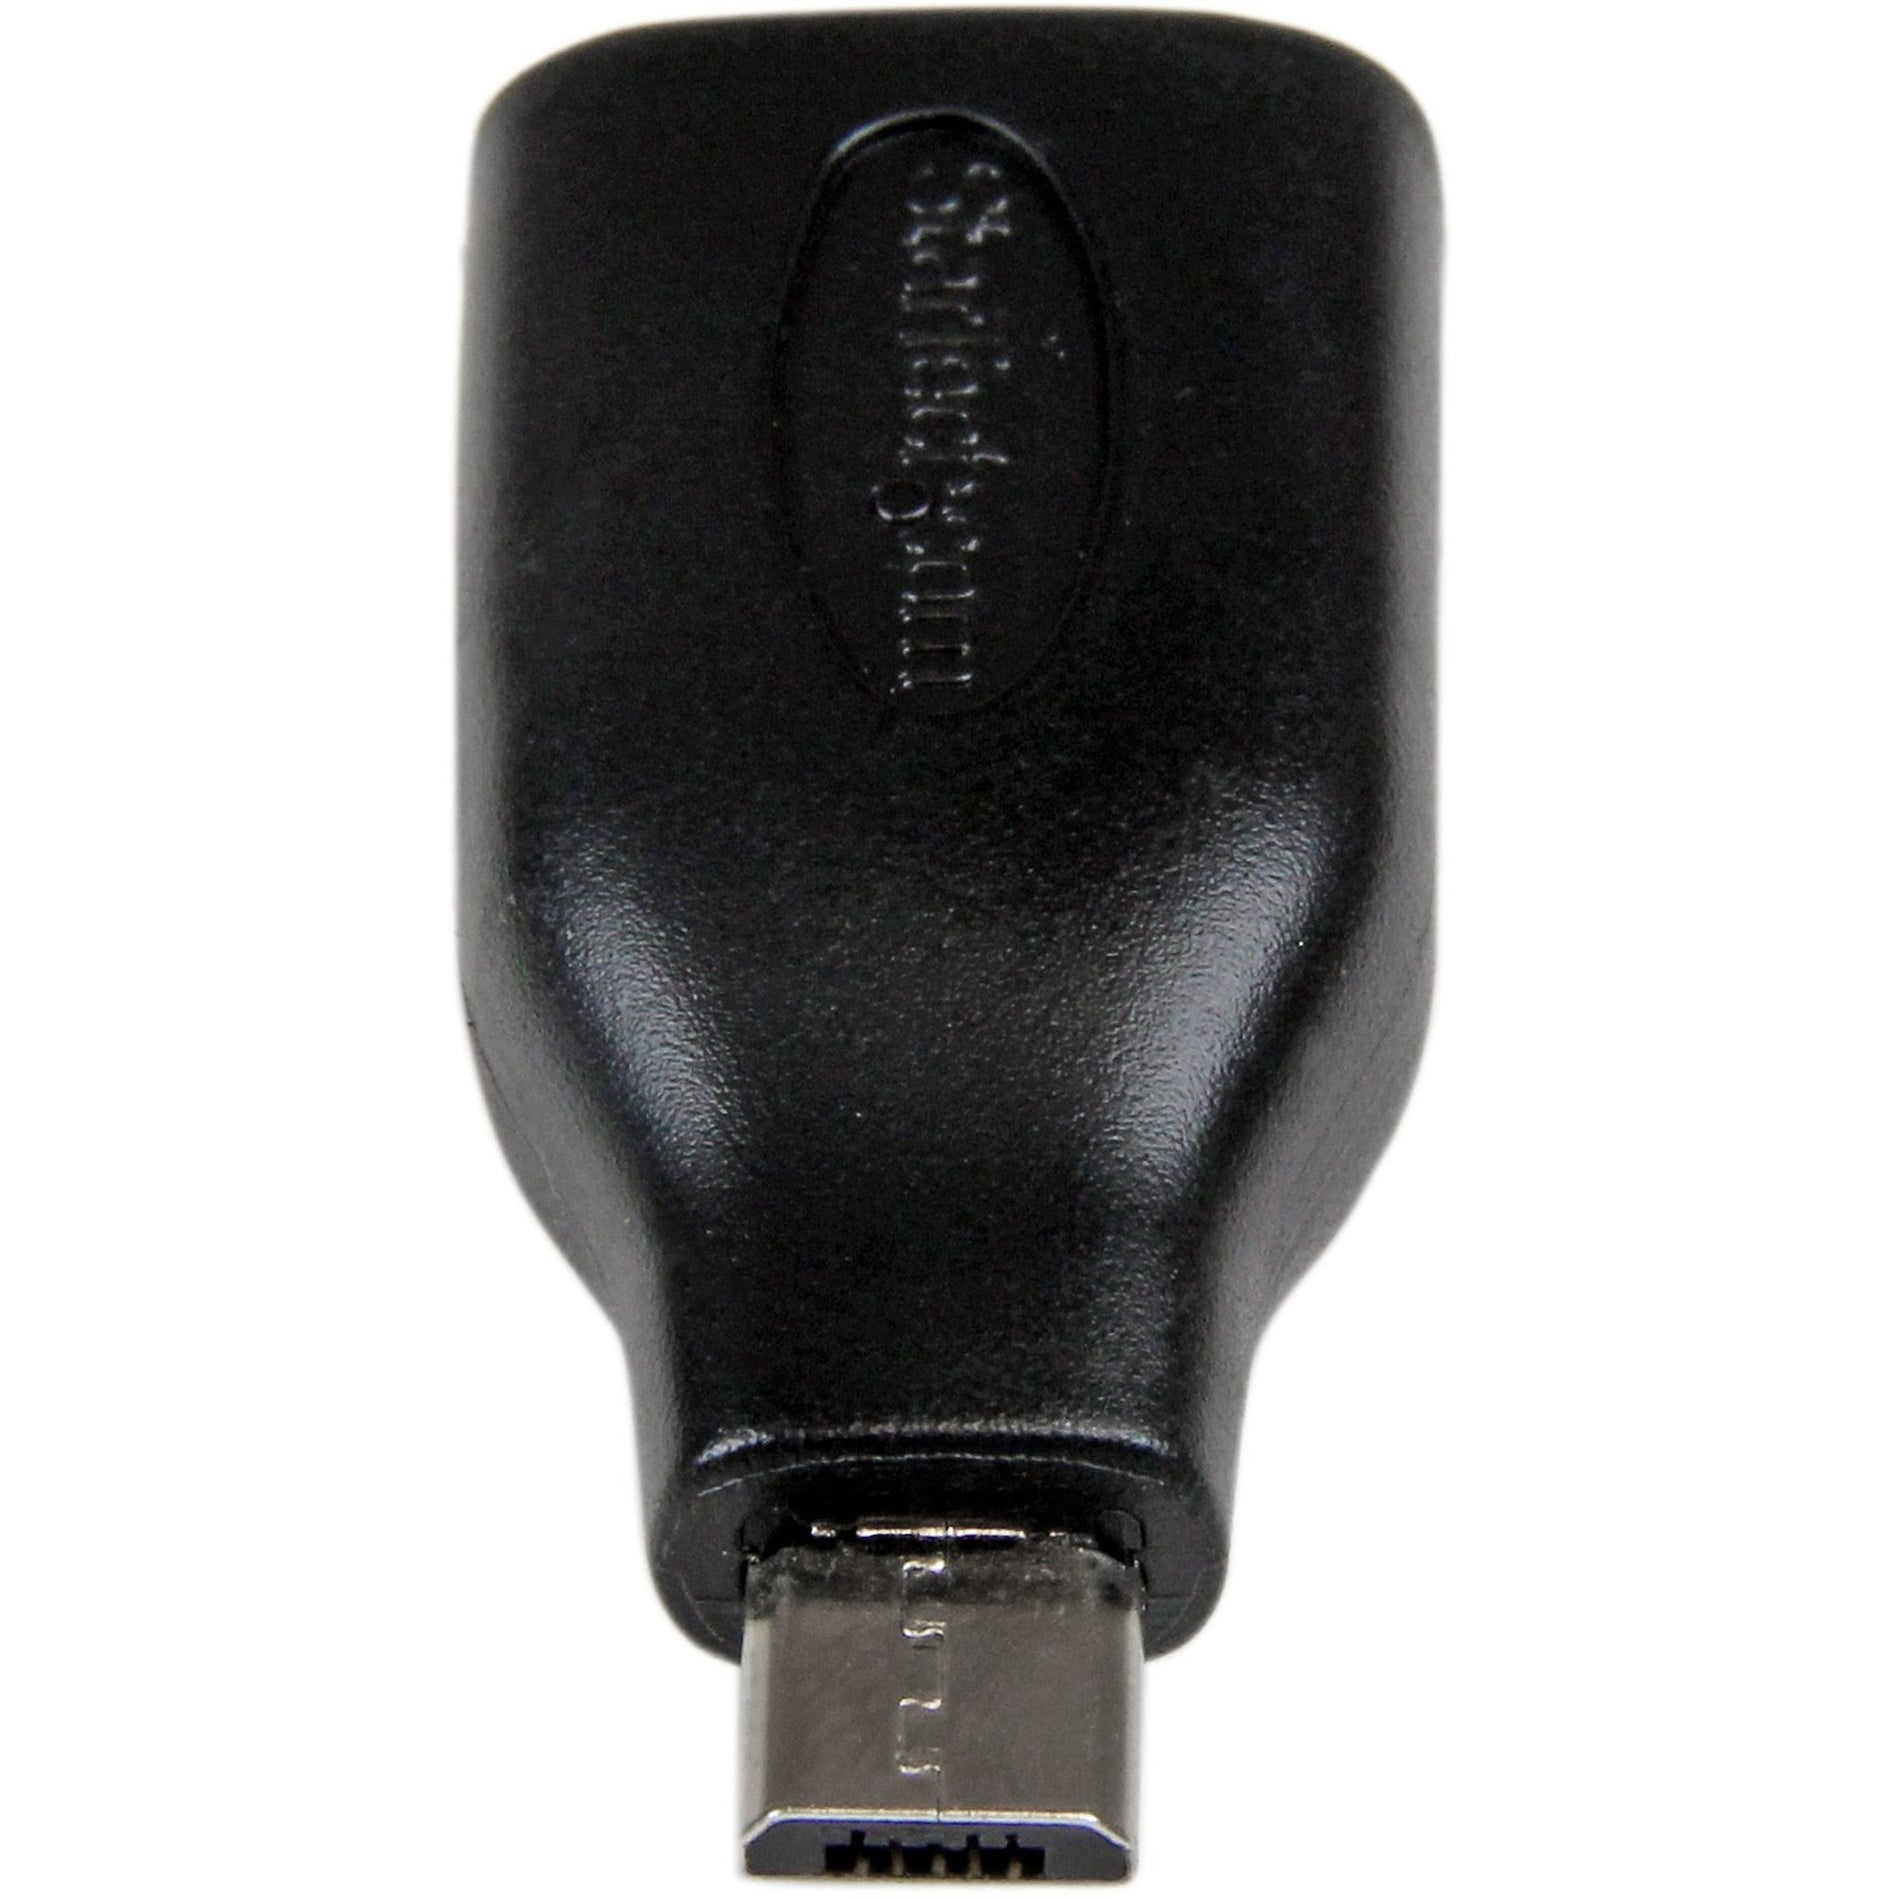 StarTech.com UUSBOTGADAP Micro USB OTG (On The Go) to USB Adapter - M/F, Data Transfer Adapter